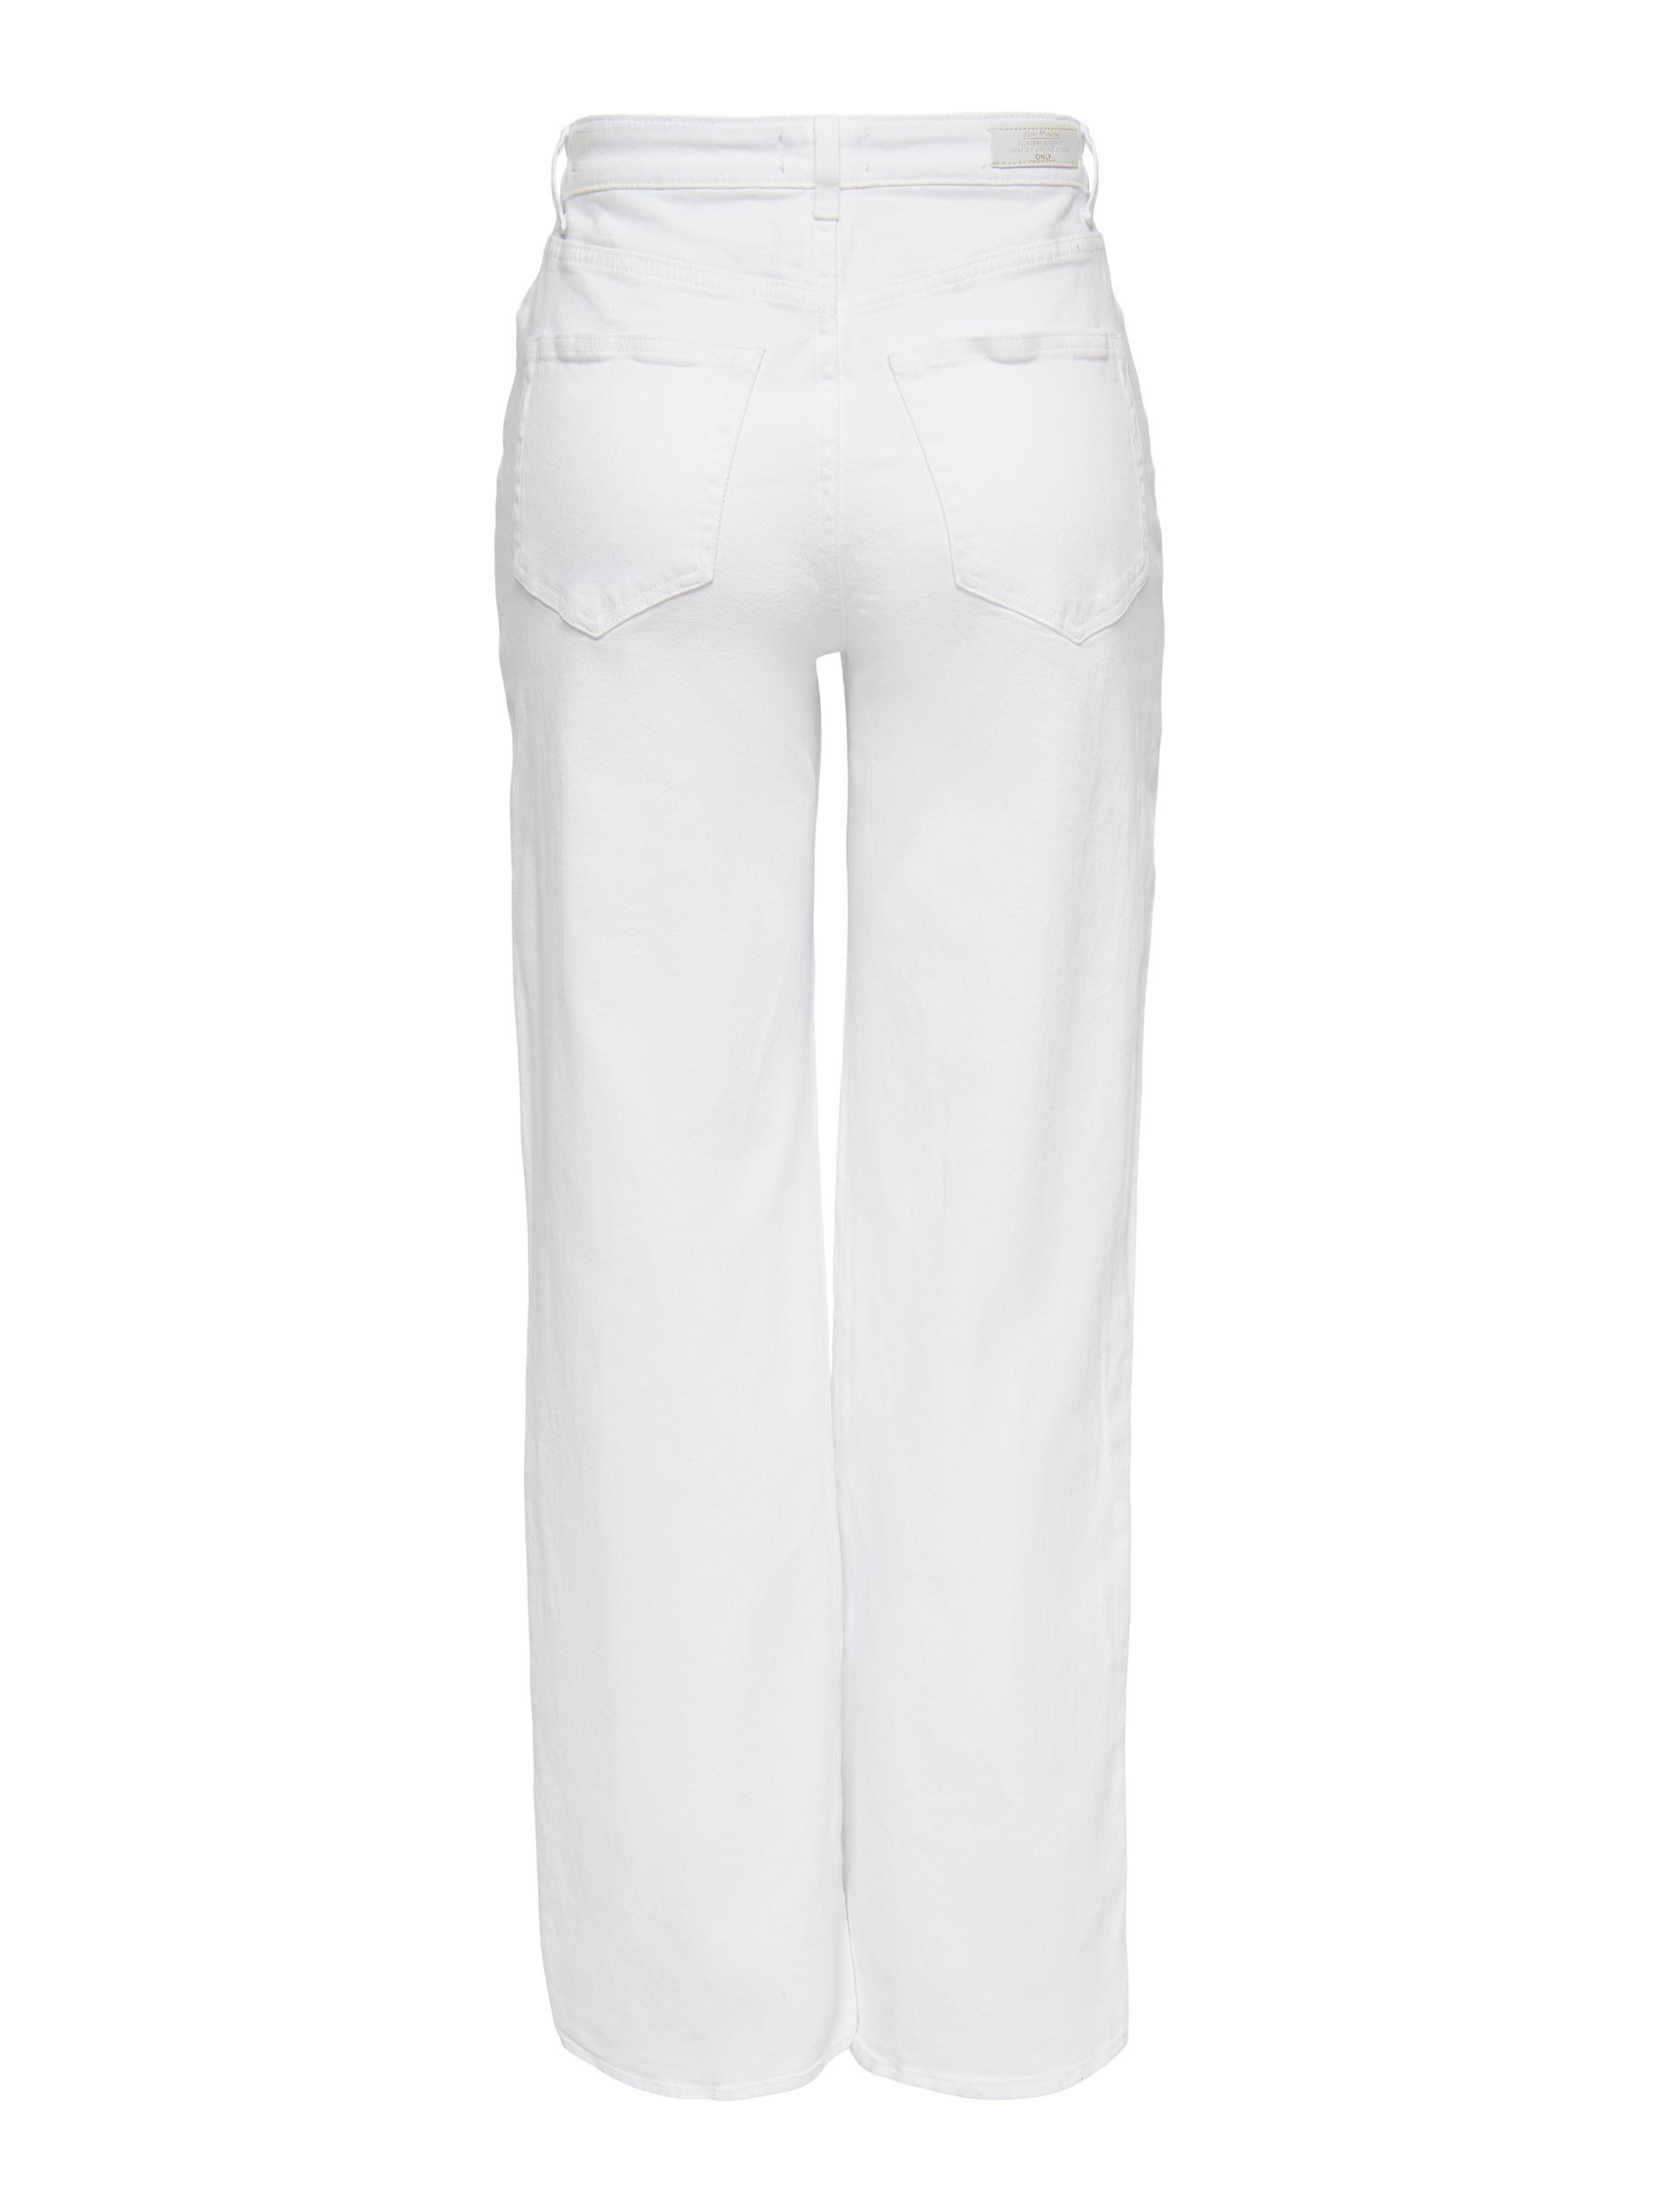 Only - Five pocket jeans, White, large image number 1